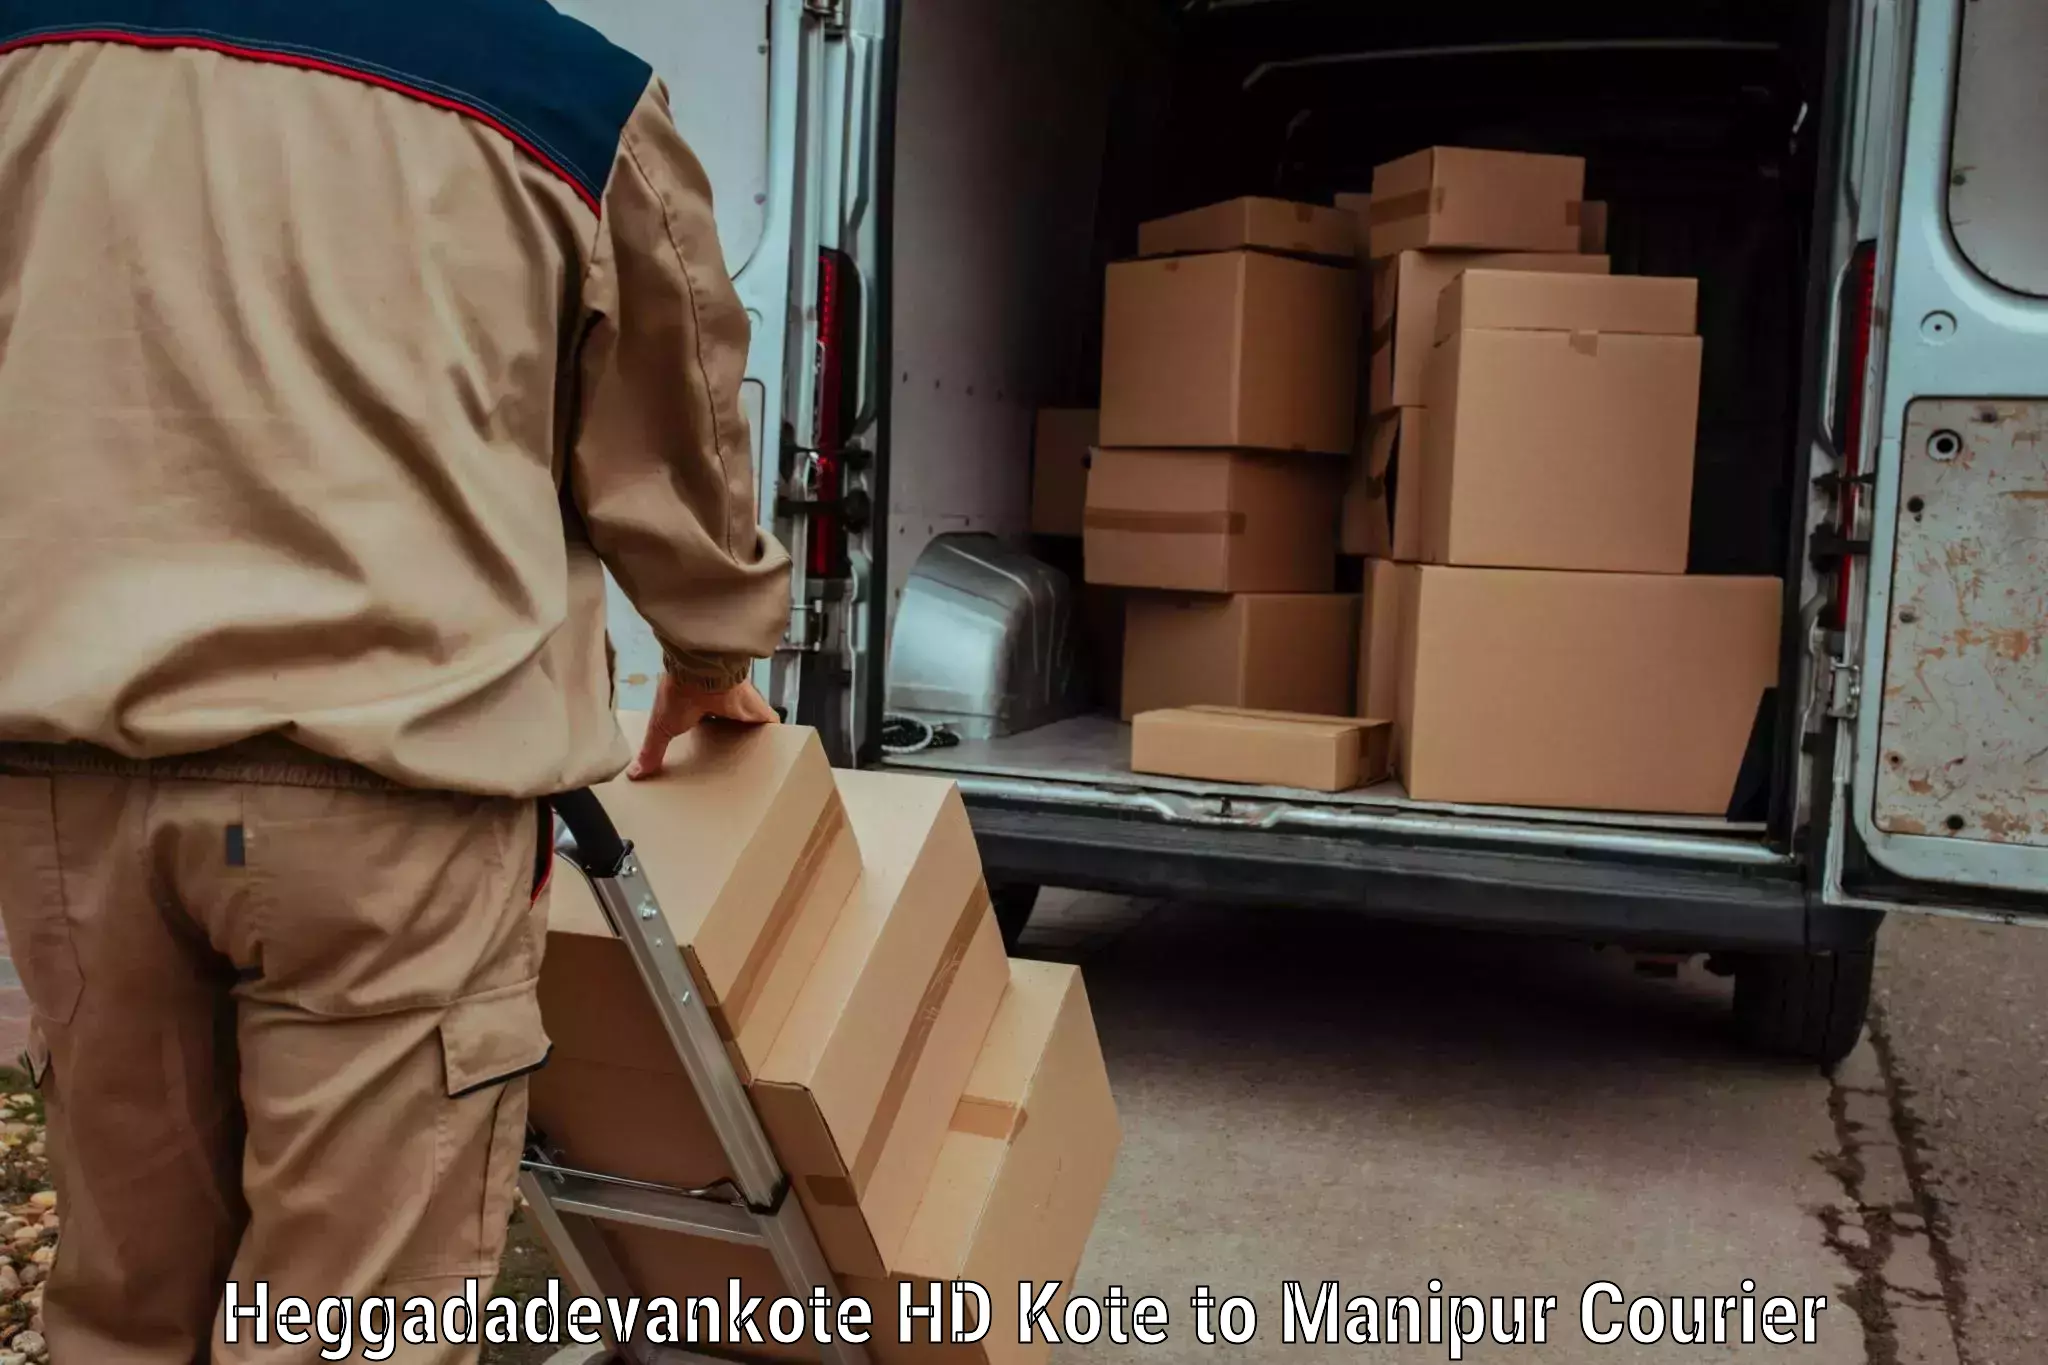 On-time delivery services Heggadadevankote HD Kote to Kanti